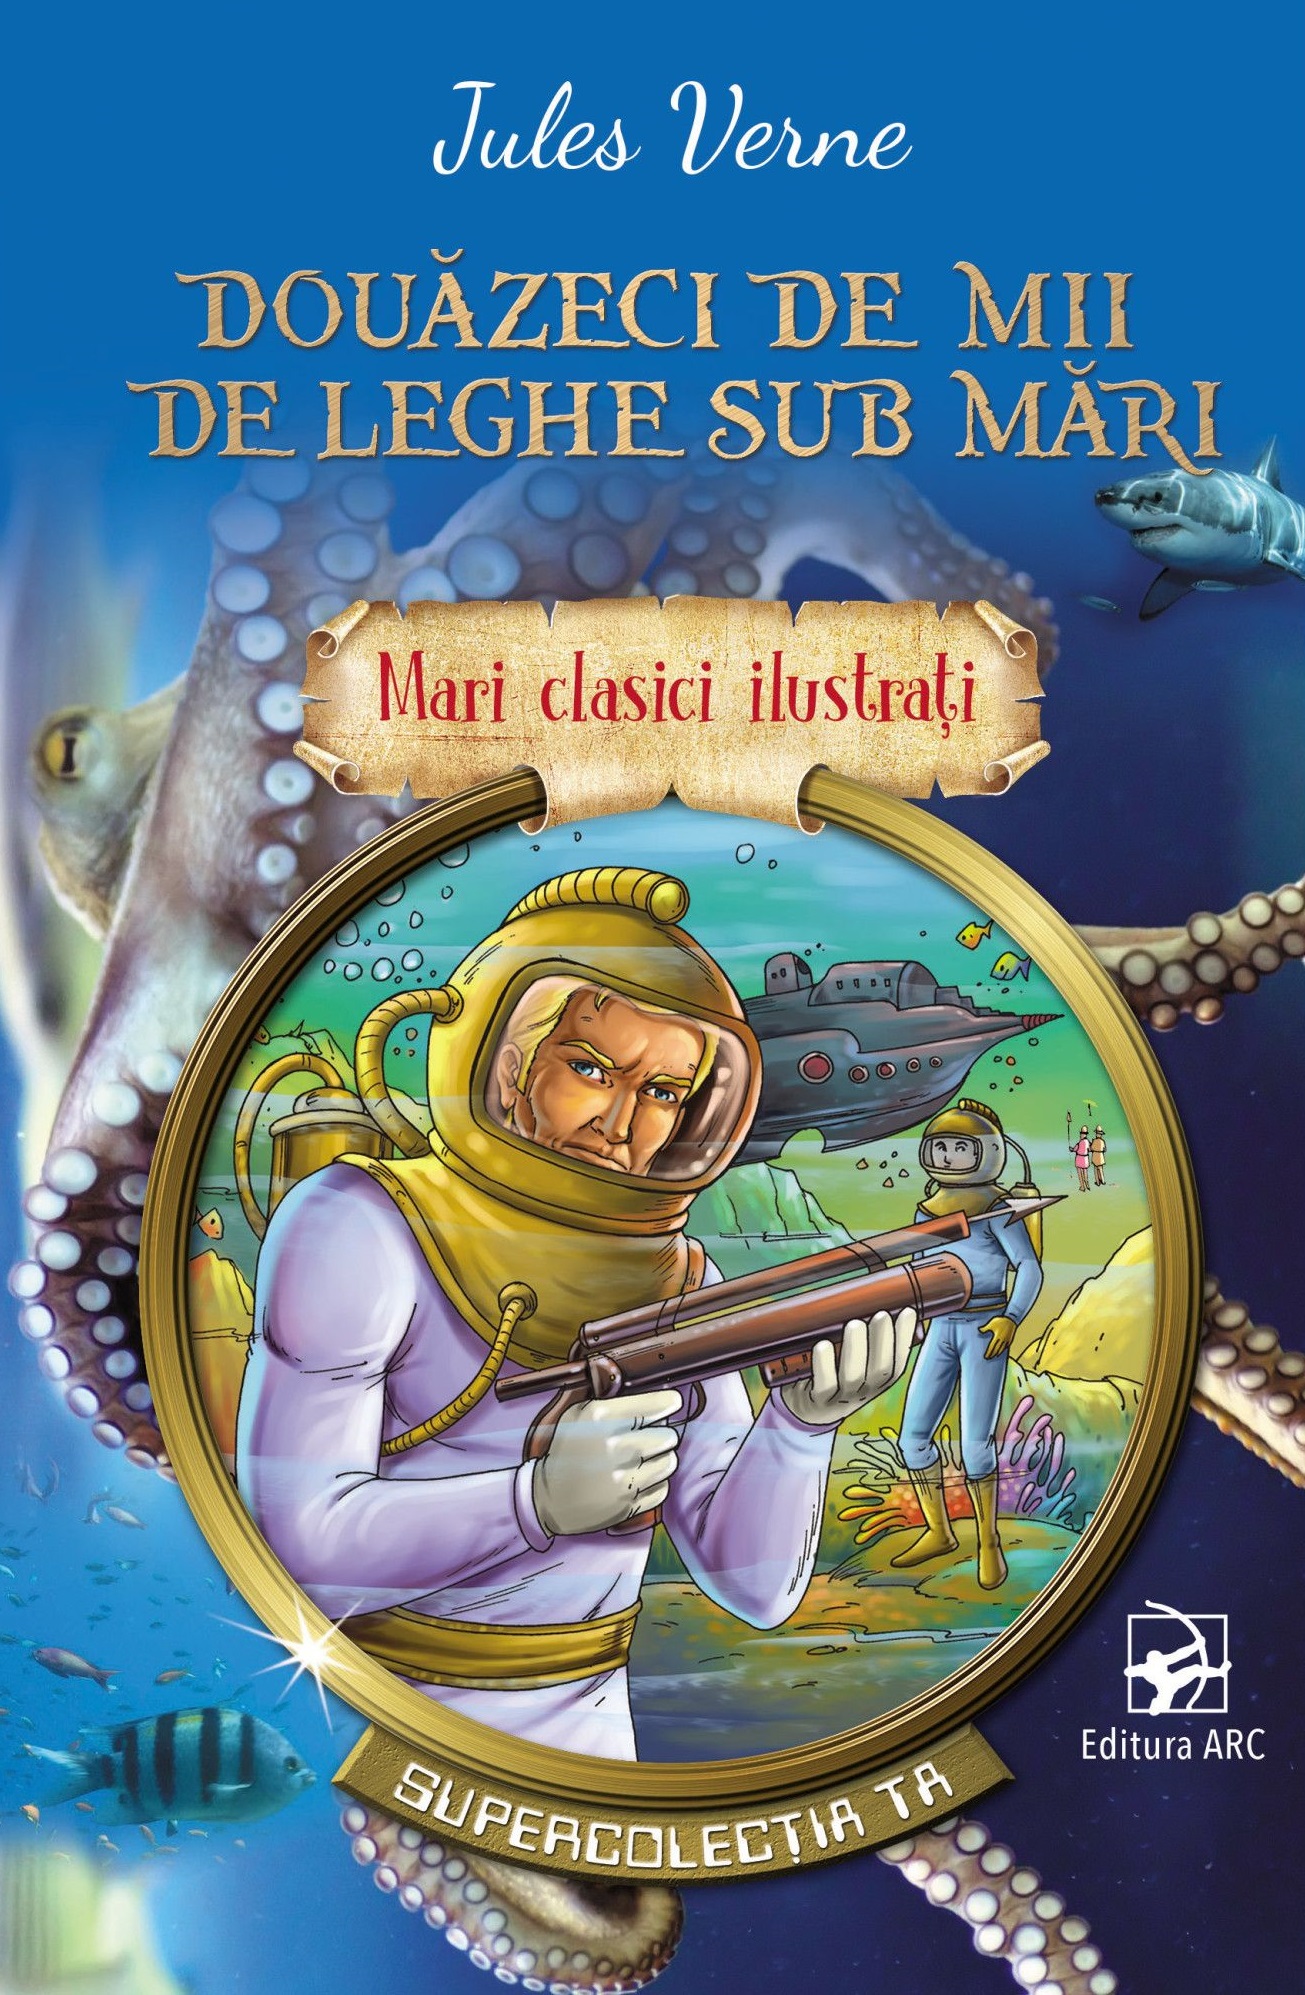 Douazeci de leghe sub mari | Jules Verne ARC